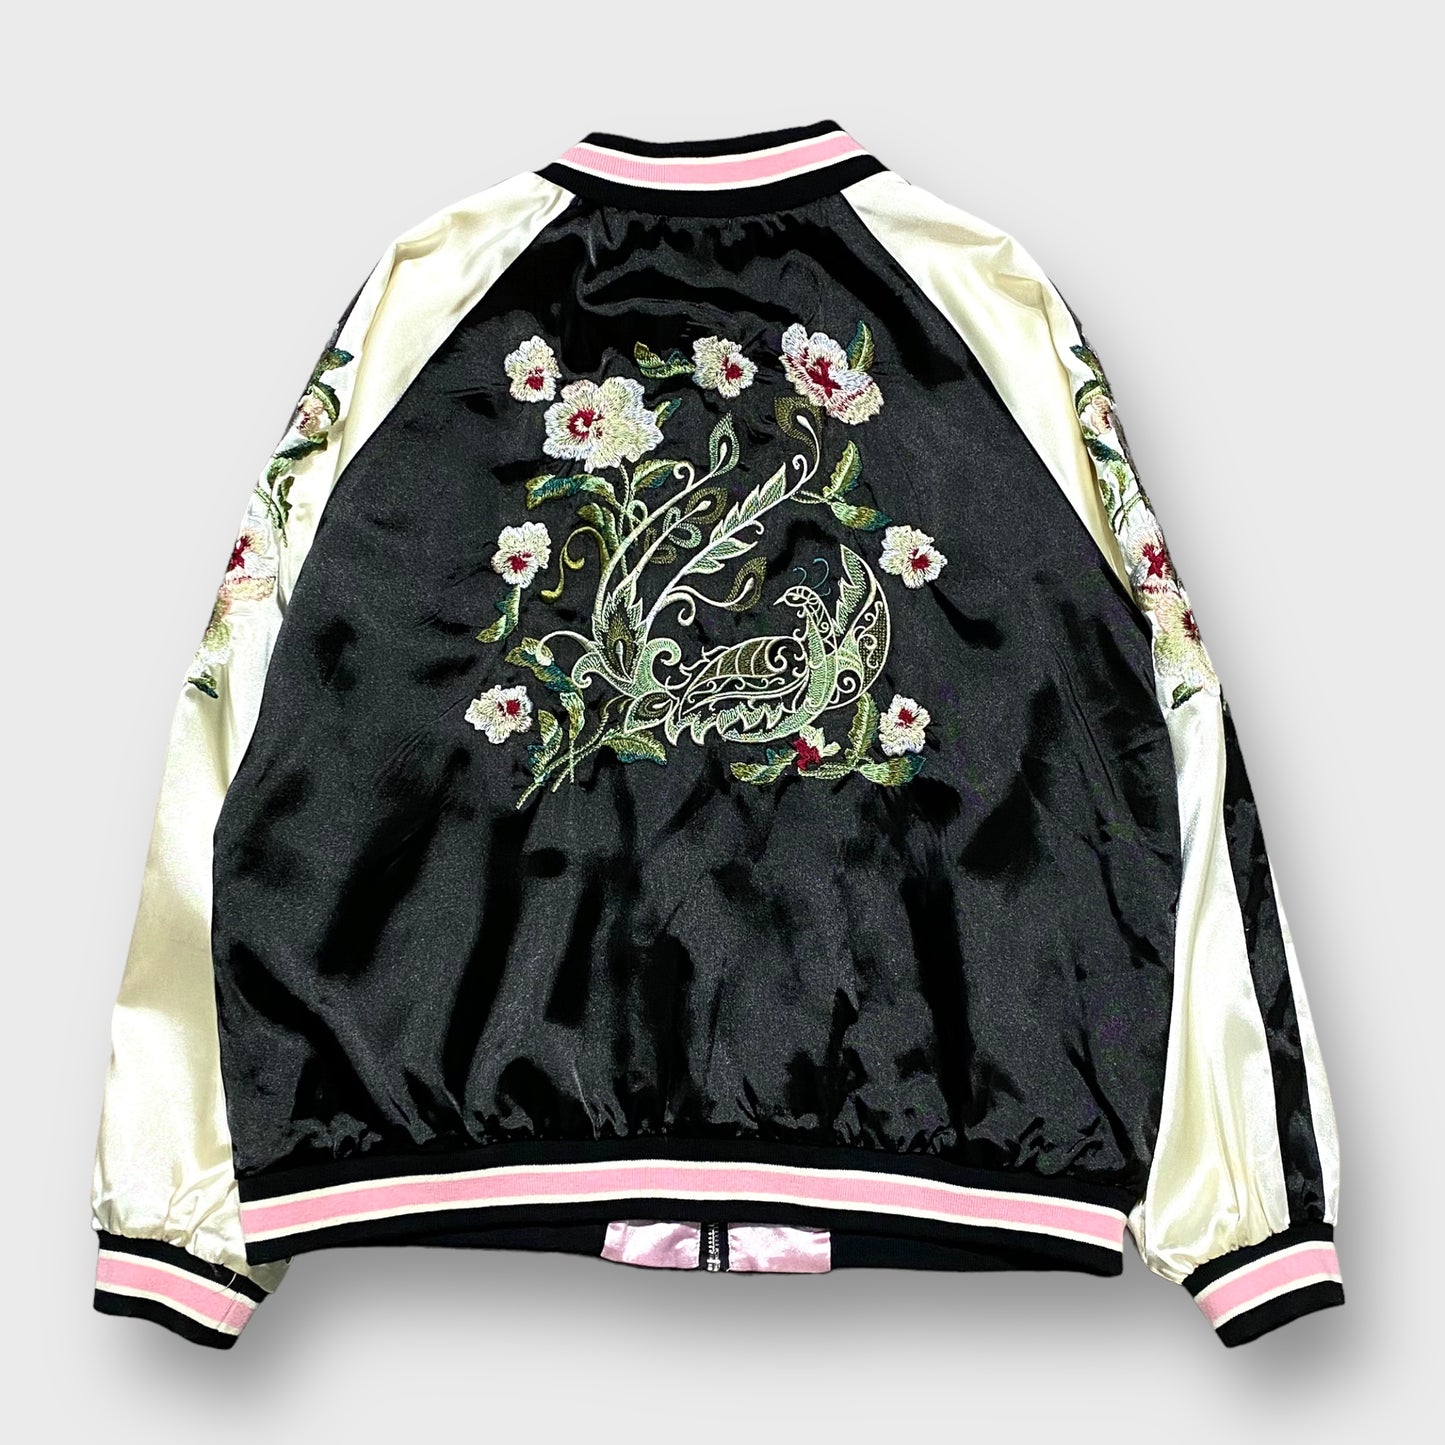 00's Flower embroidery reversible souvenir jacket